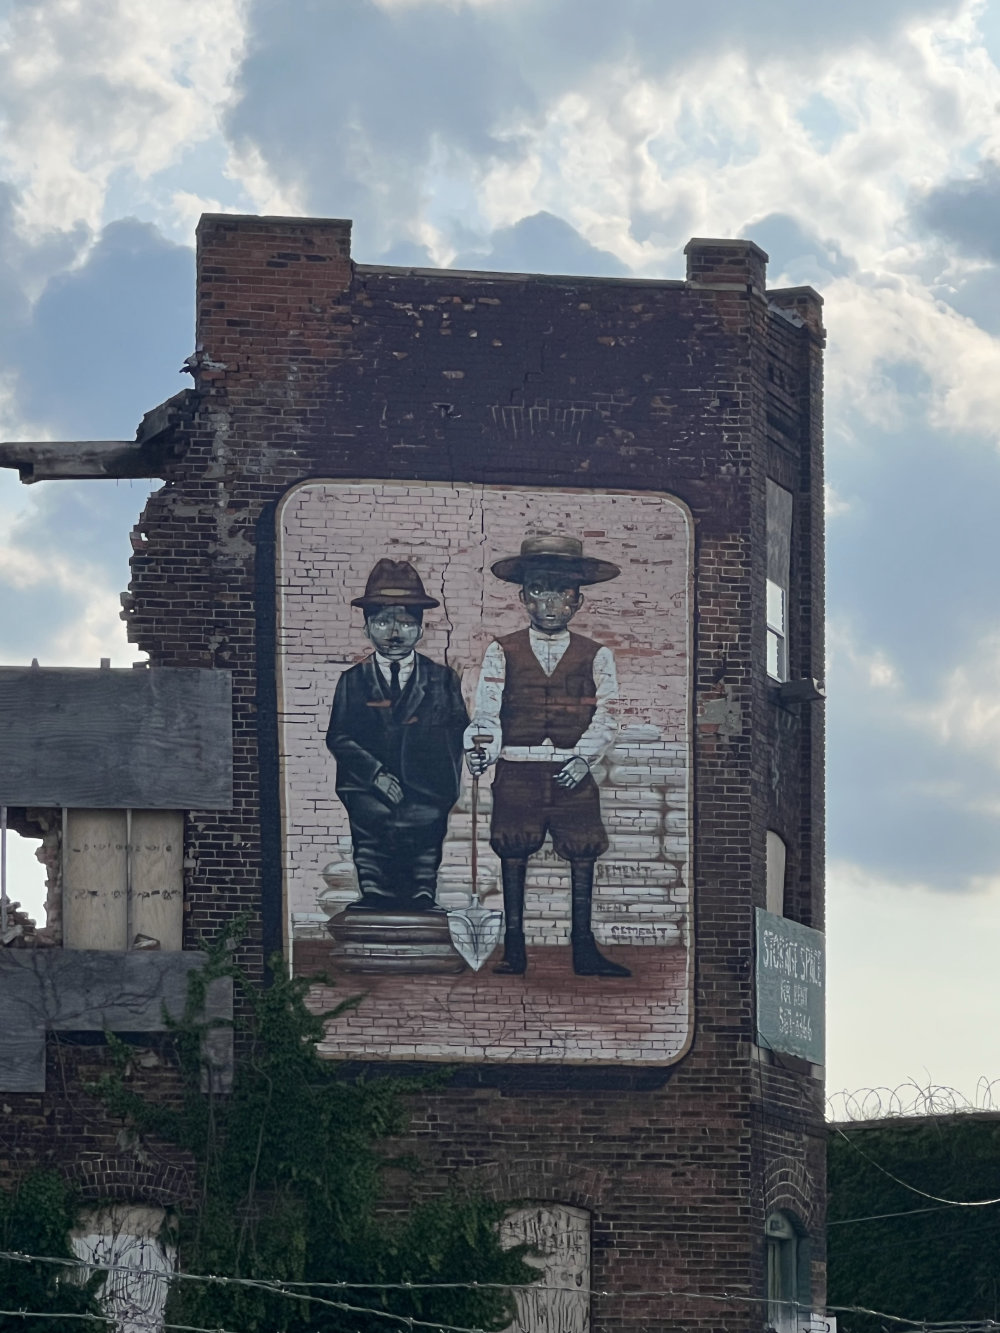 mural in Detroit by artist PixelPancho.